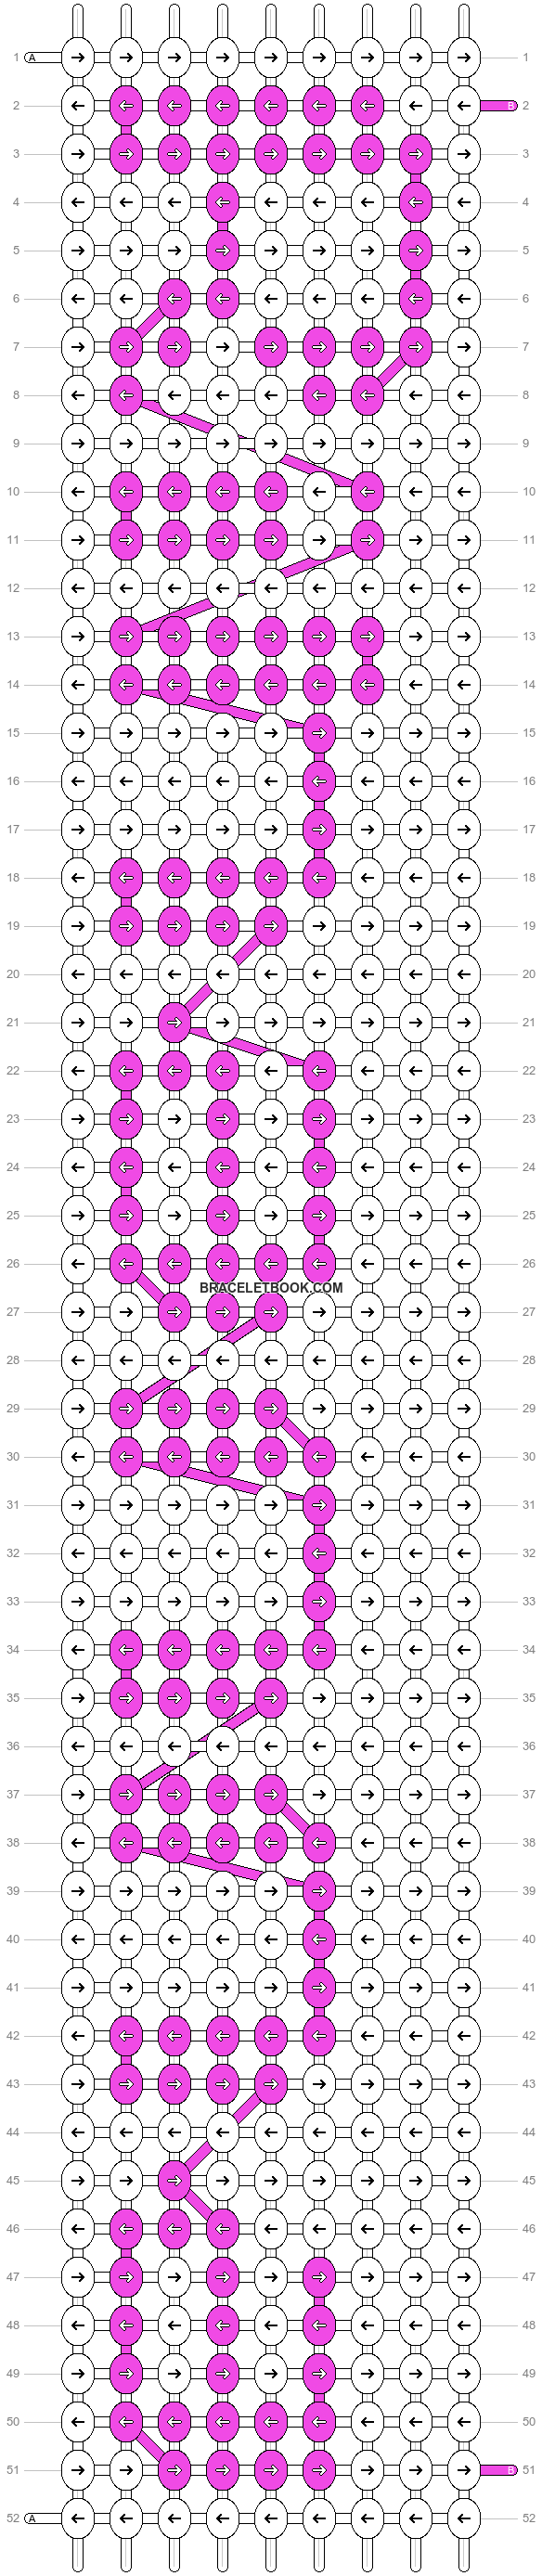 Alpha pattern #555 variation #53493 pattern